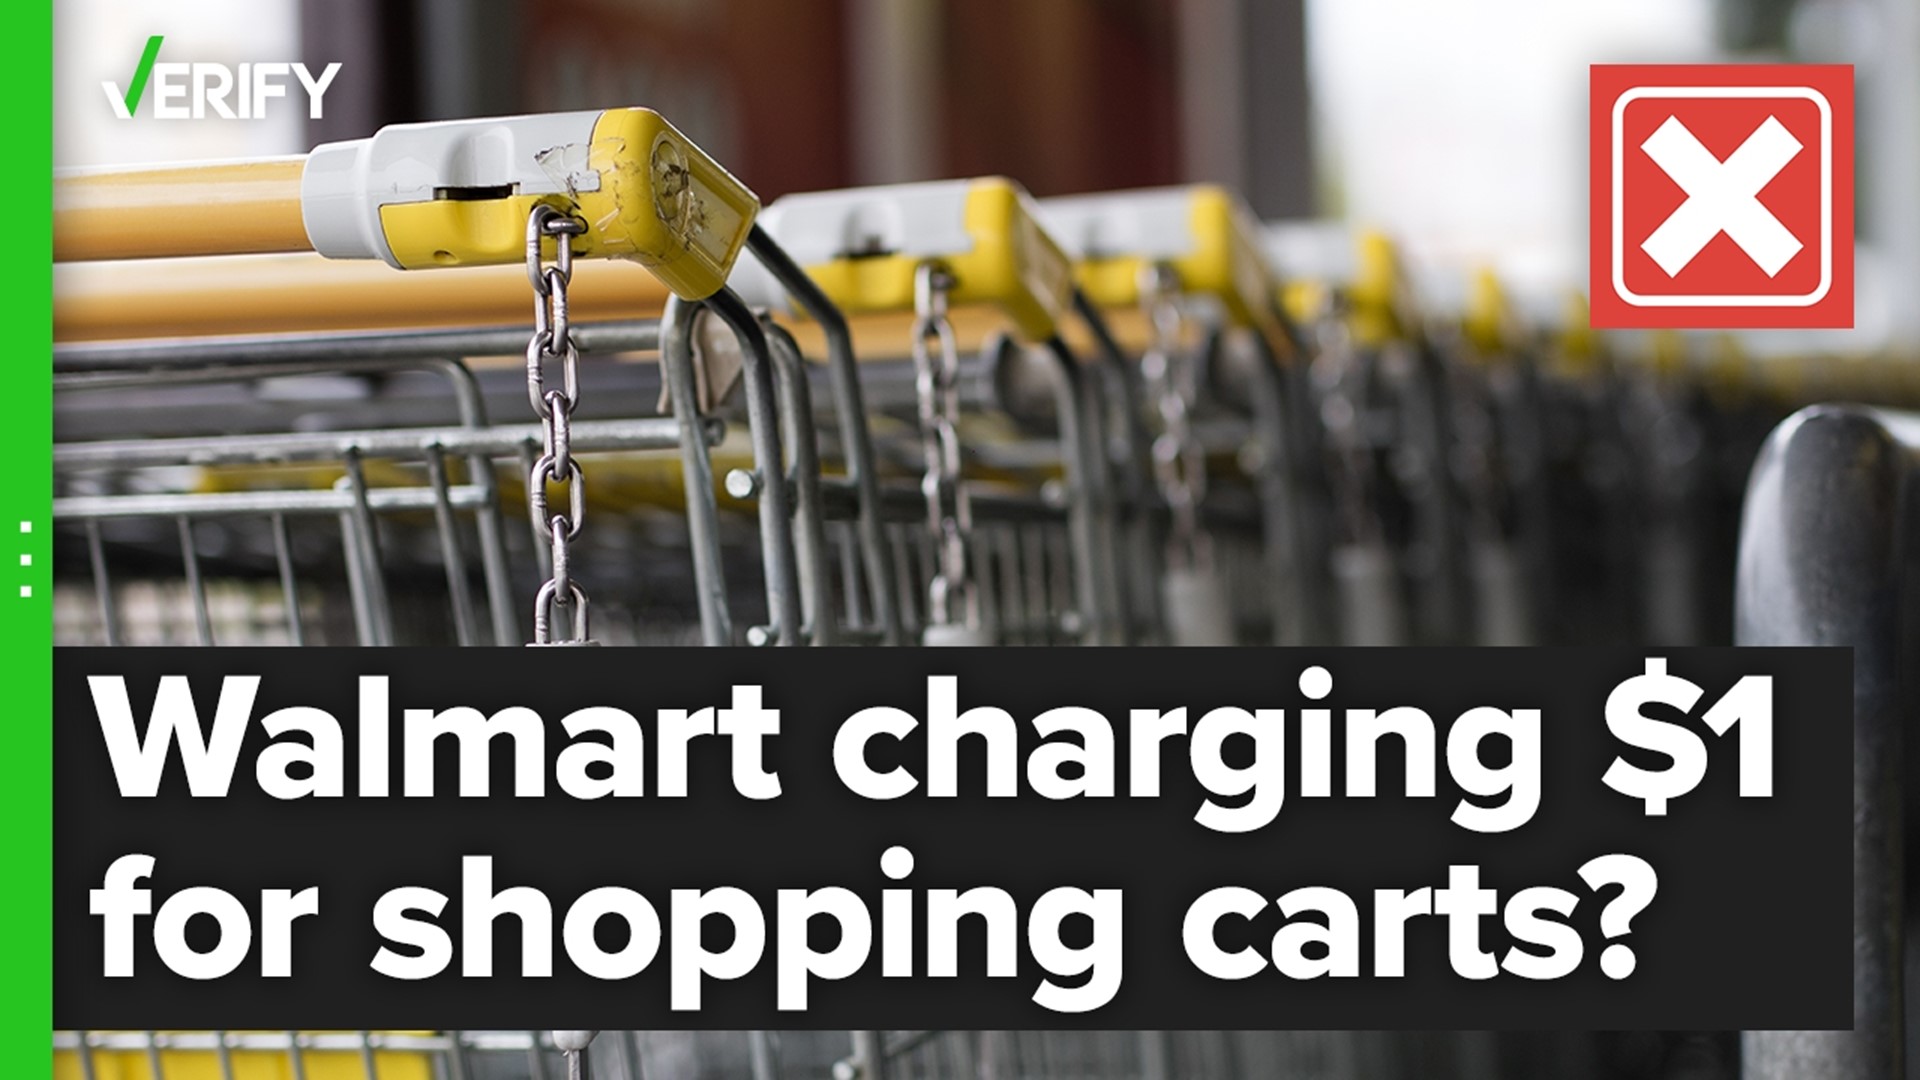 Walmart isn't charging 1 to use carts